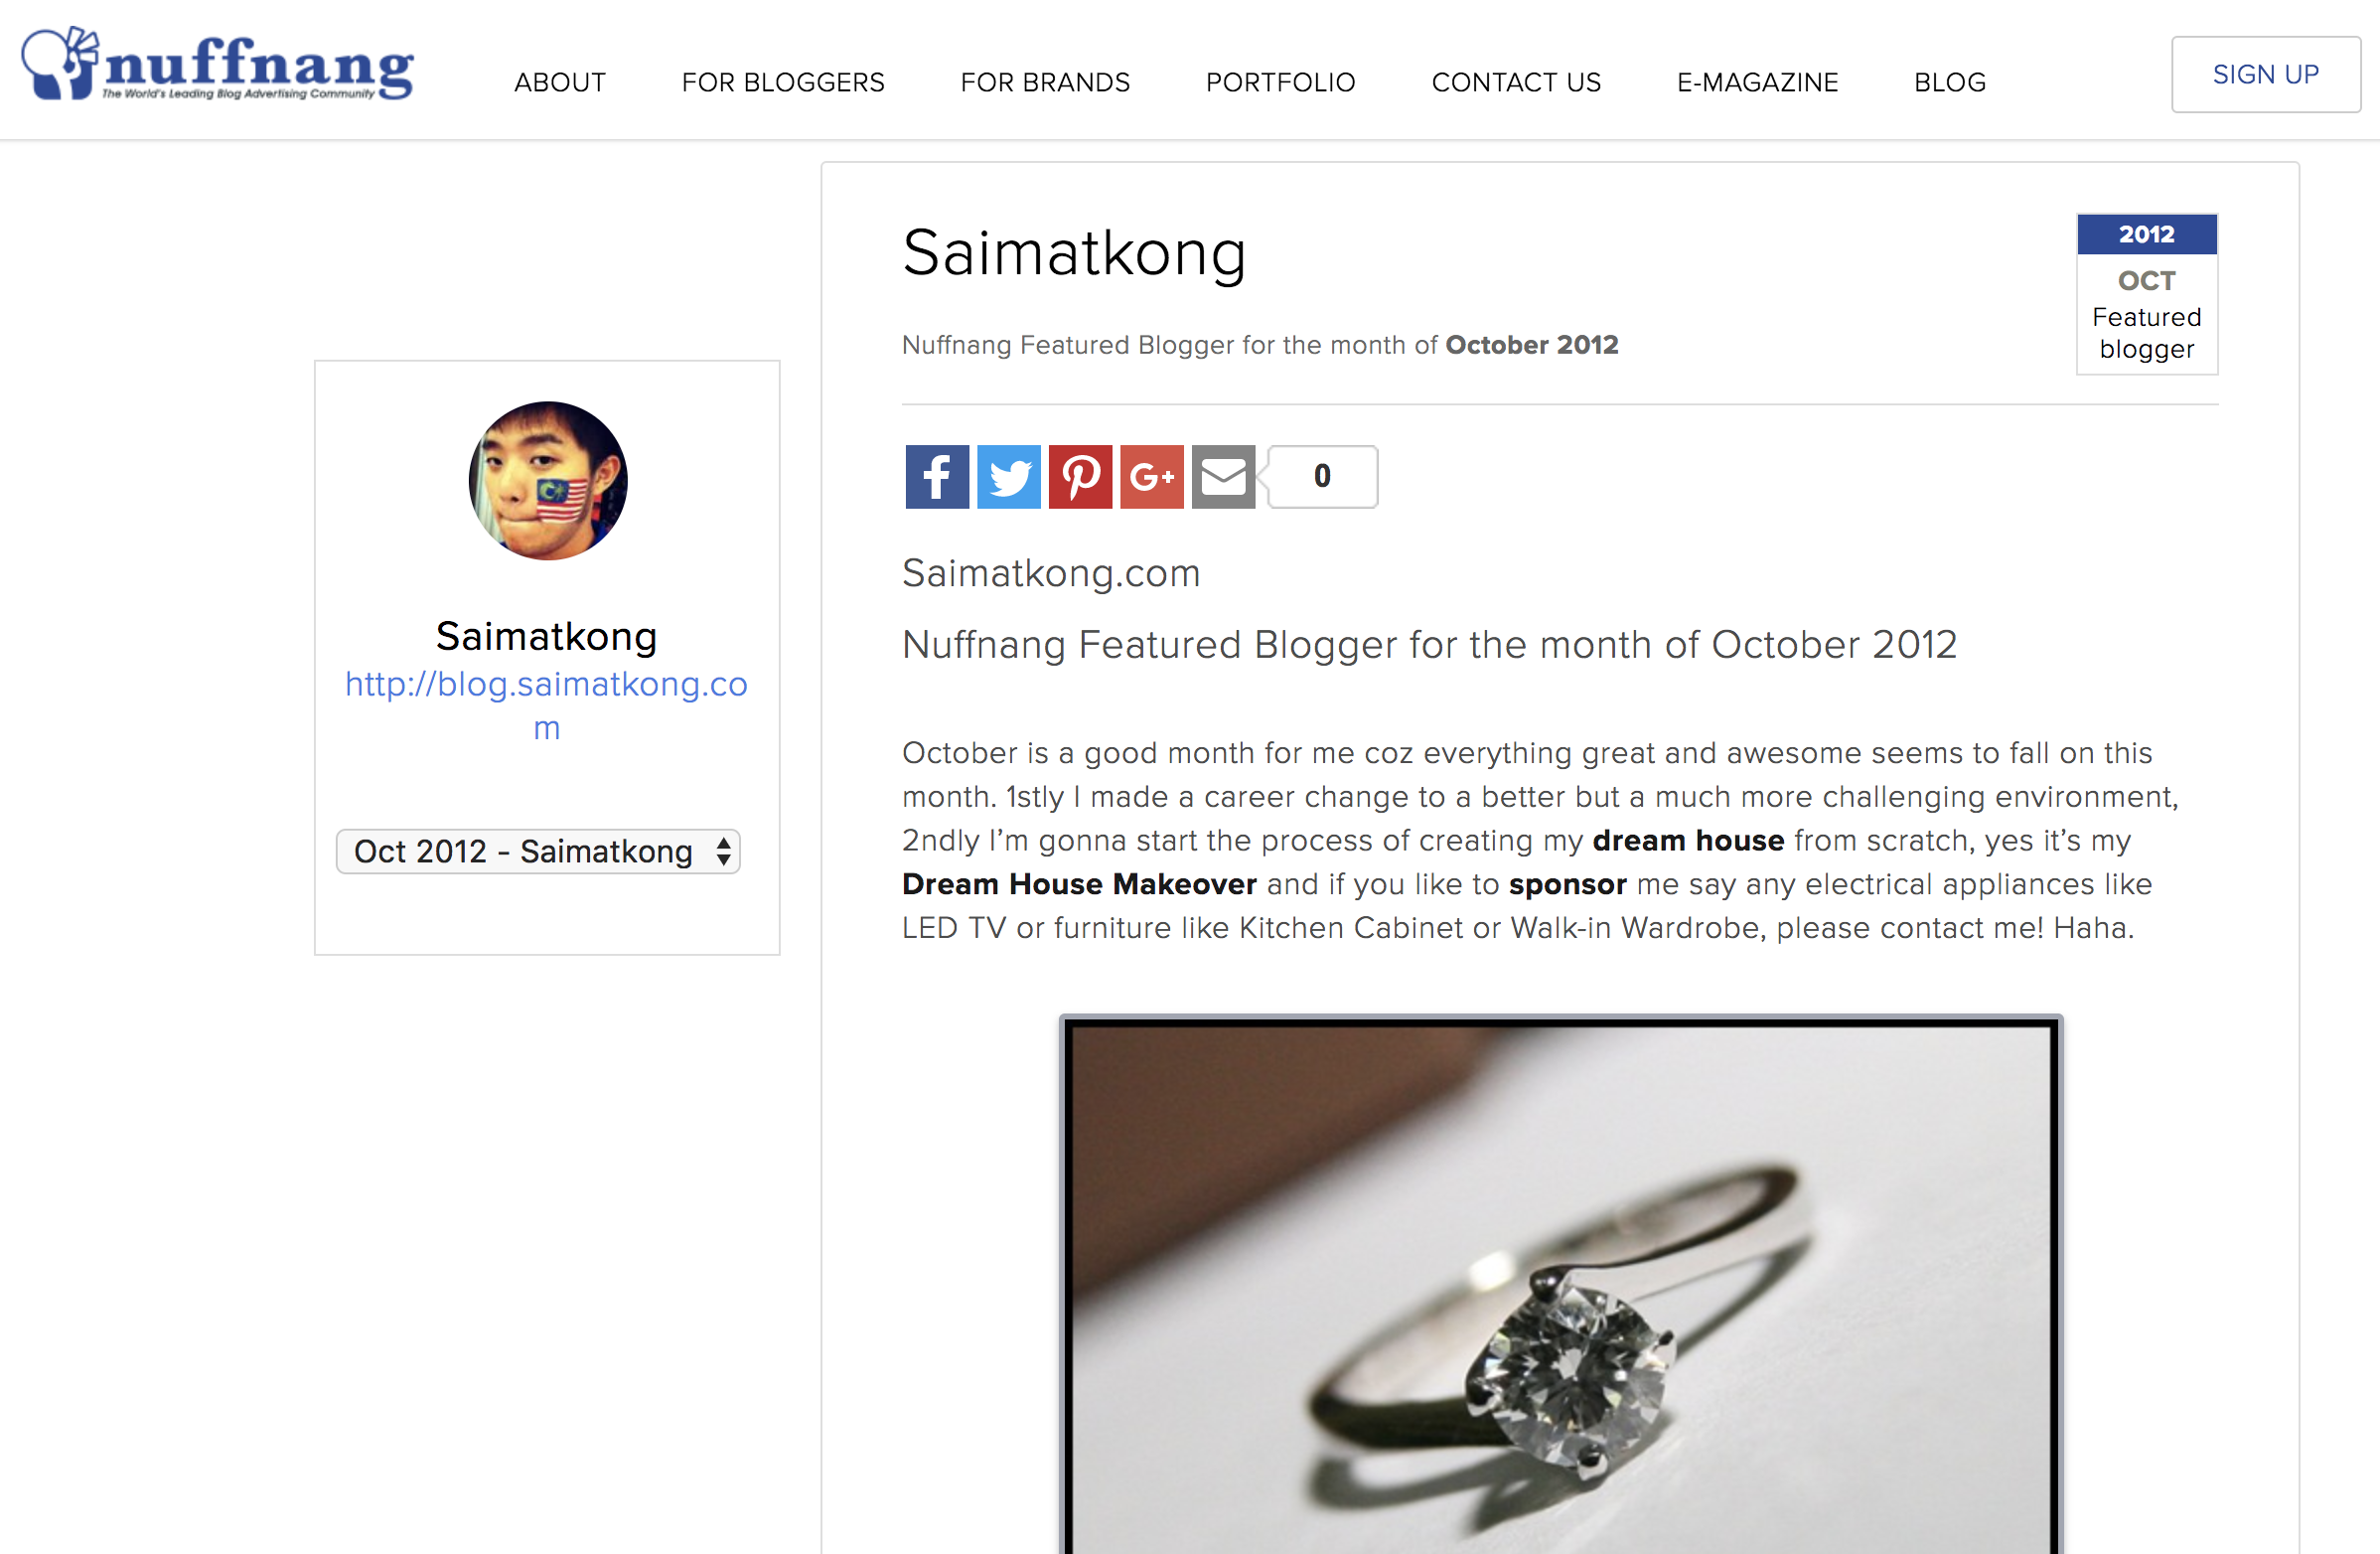 Nuffnang Featured Blogger - Saimatkong